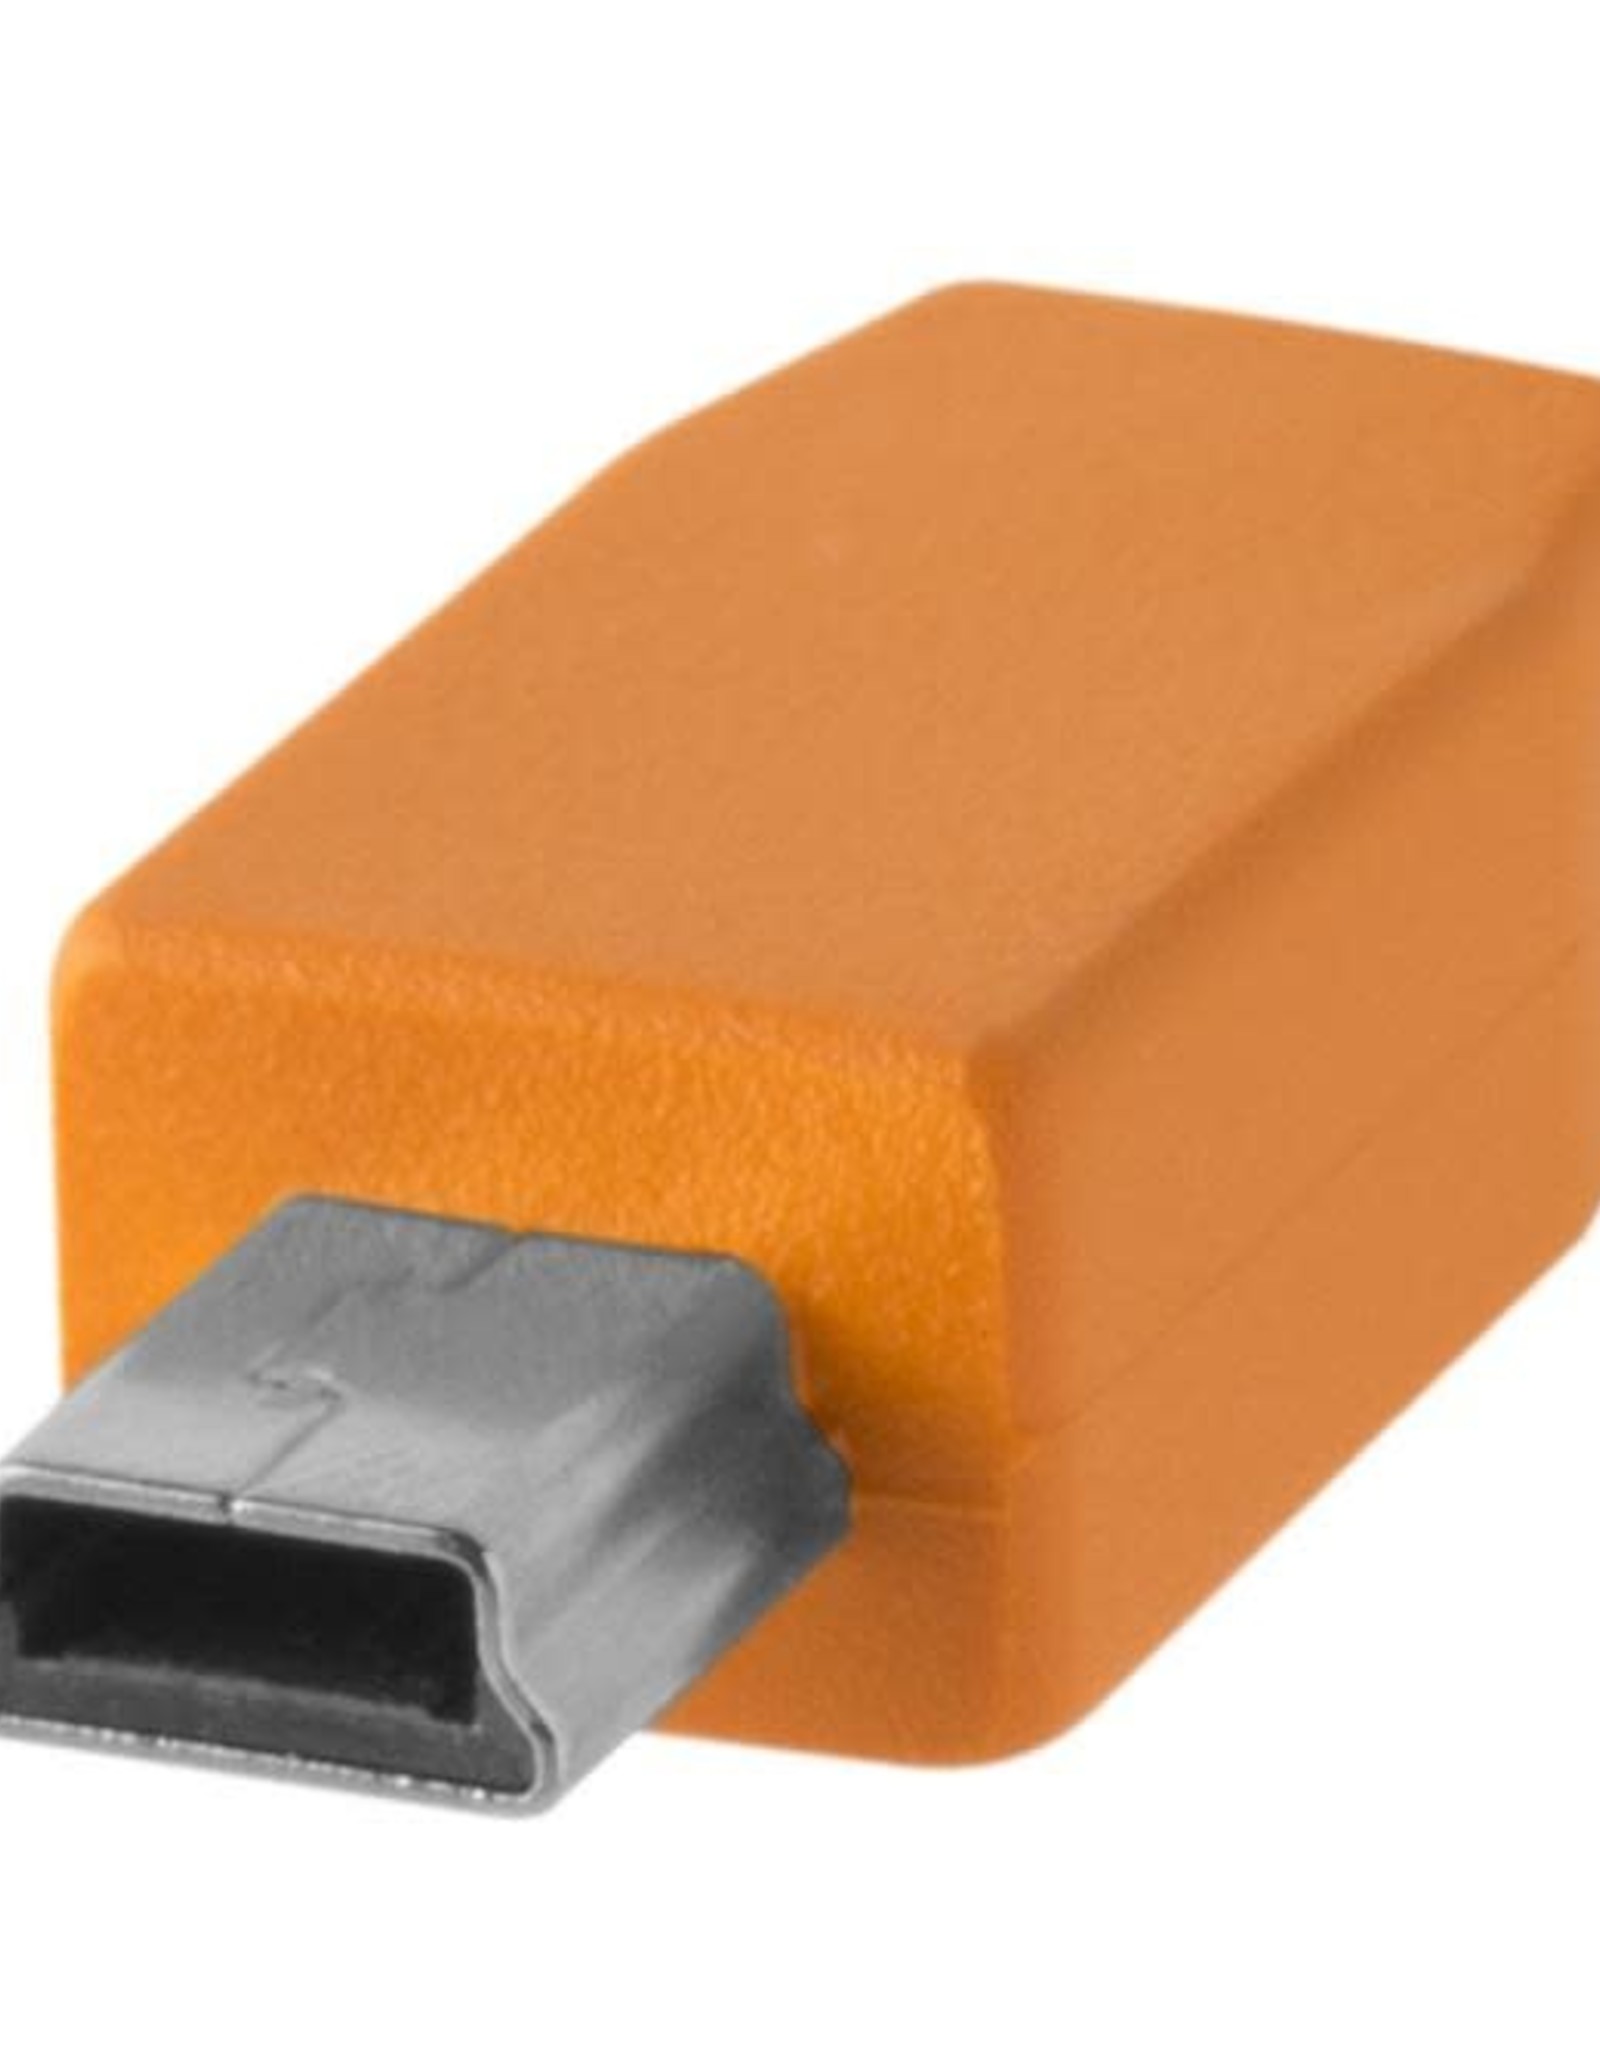 Tether Tools Tether Tools TetherPro USB-C to 2.0 Mini-B 5-Pin, 15' (4.6m), High-Visibility Orange